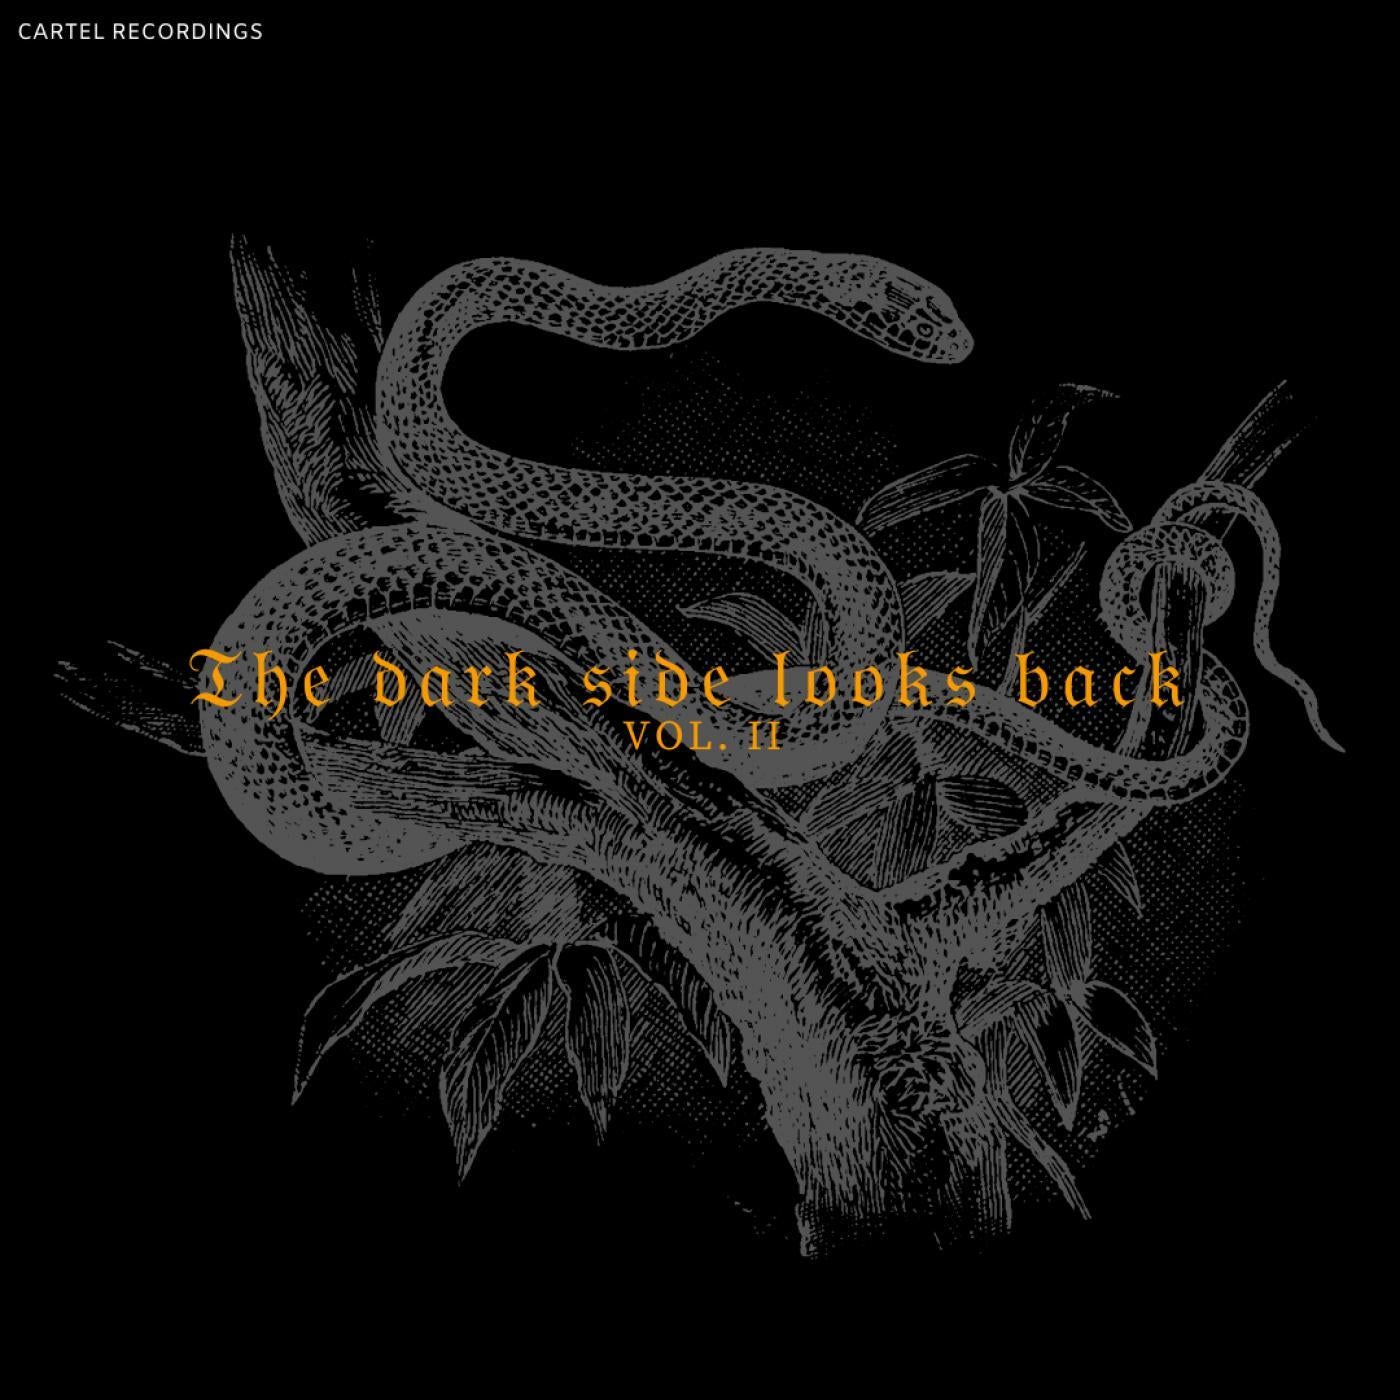 THE DARK SIDE LOOKS BACK - Vol. II